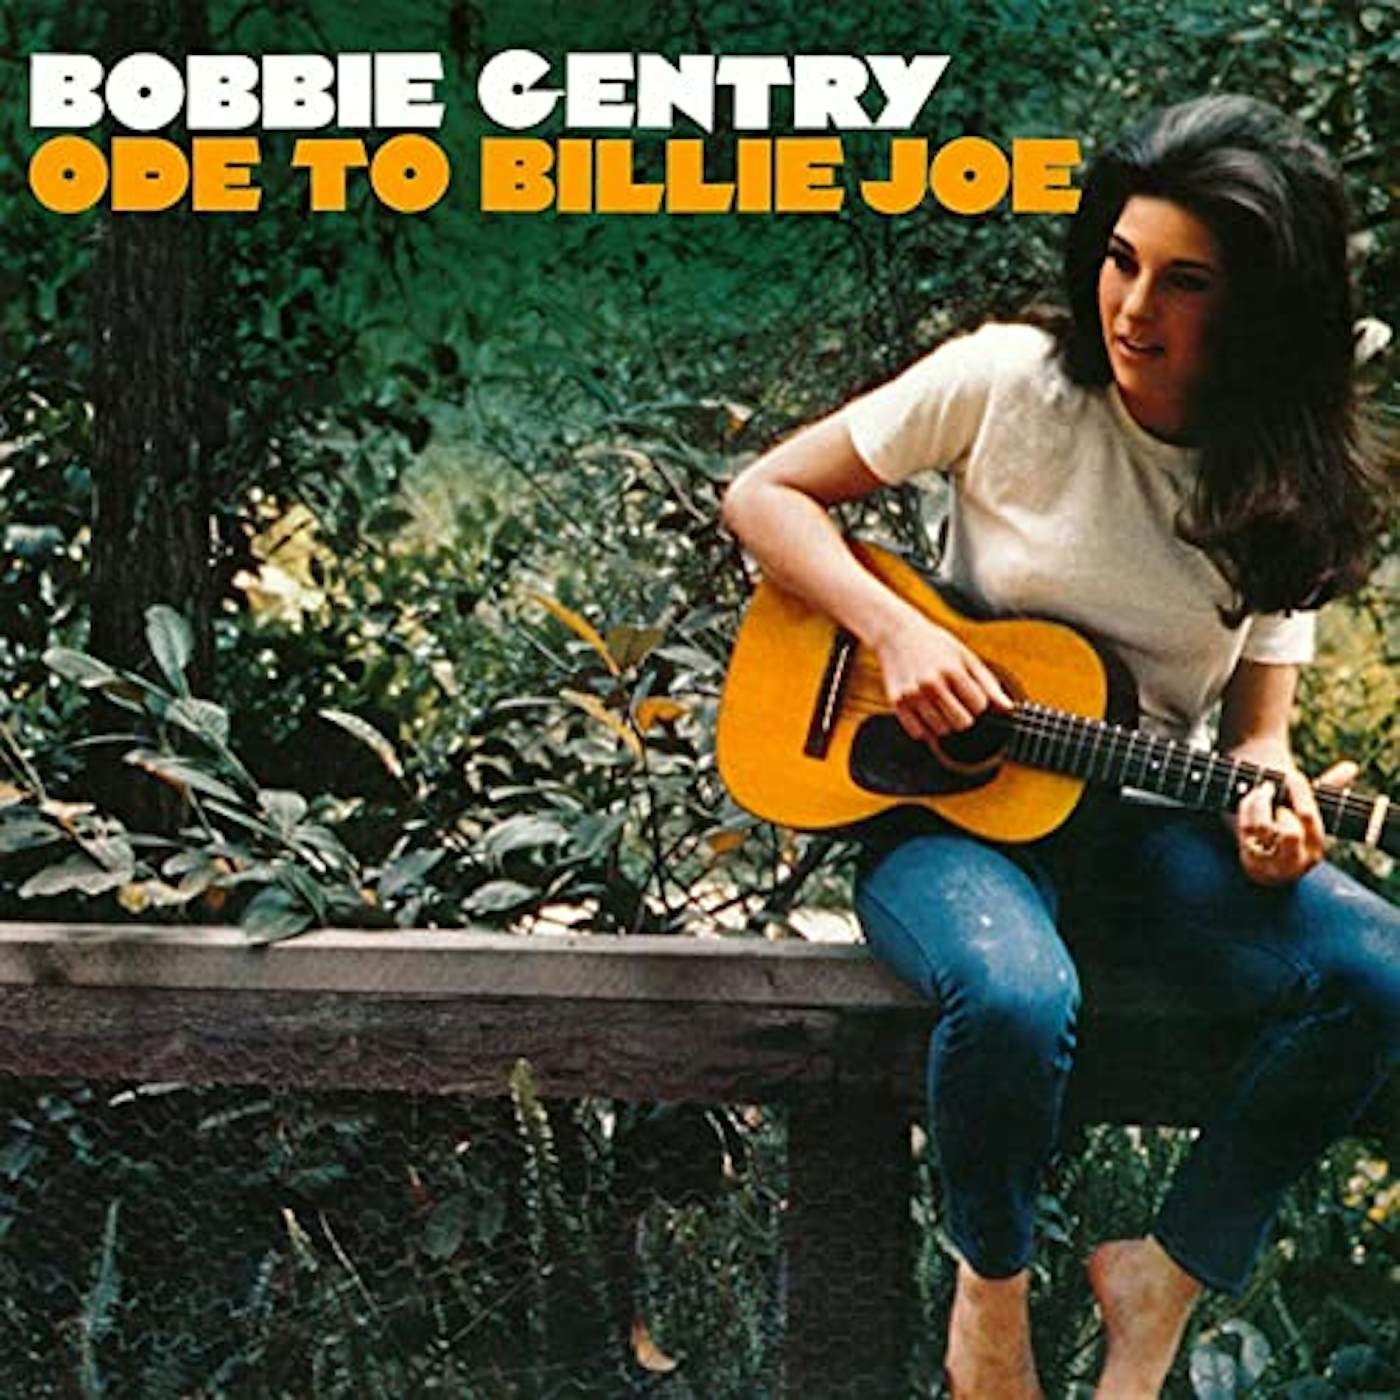 BOBBIE GENTRY: ODE TO BILLIE JOE Vinyl Record